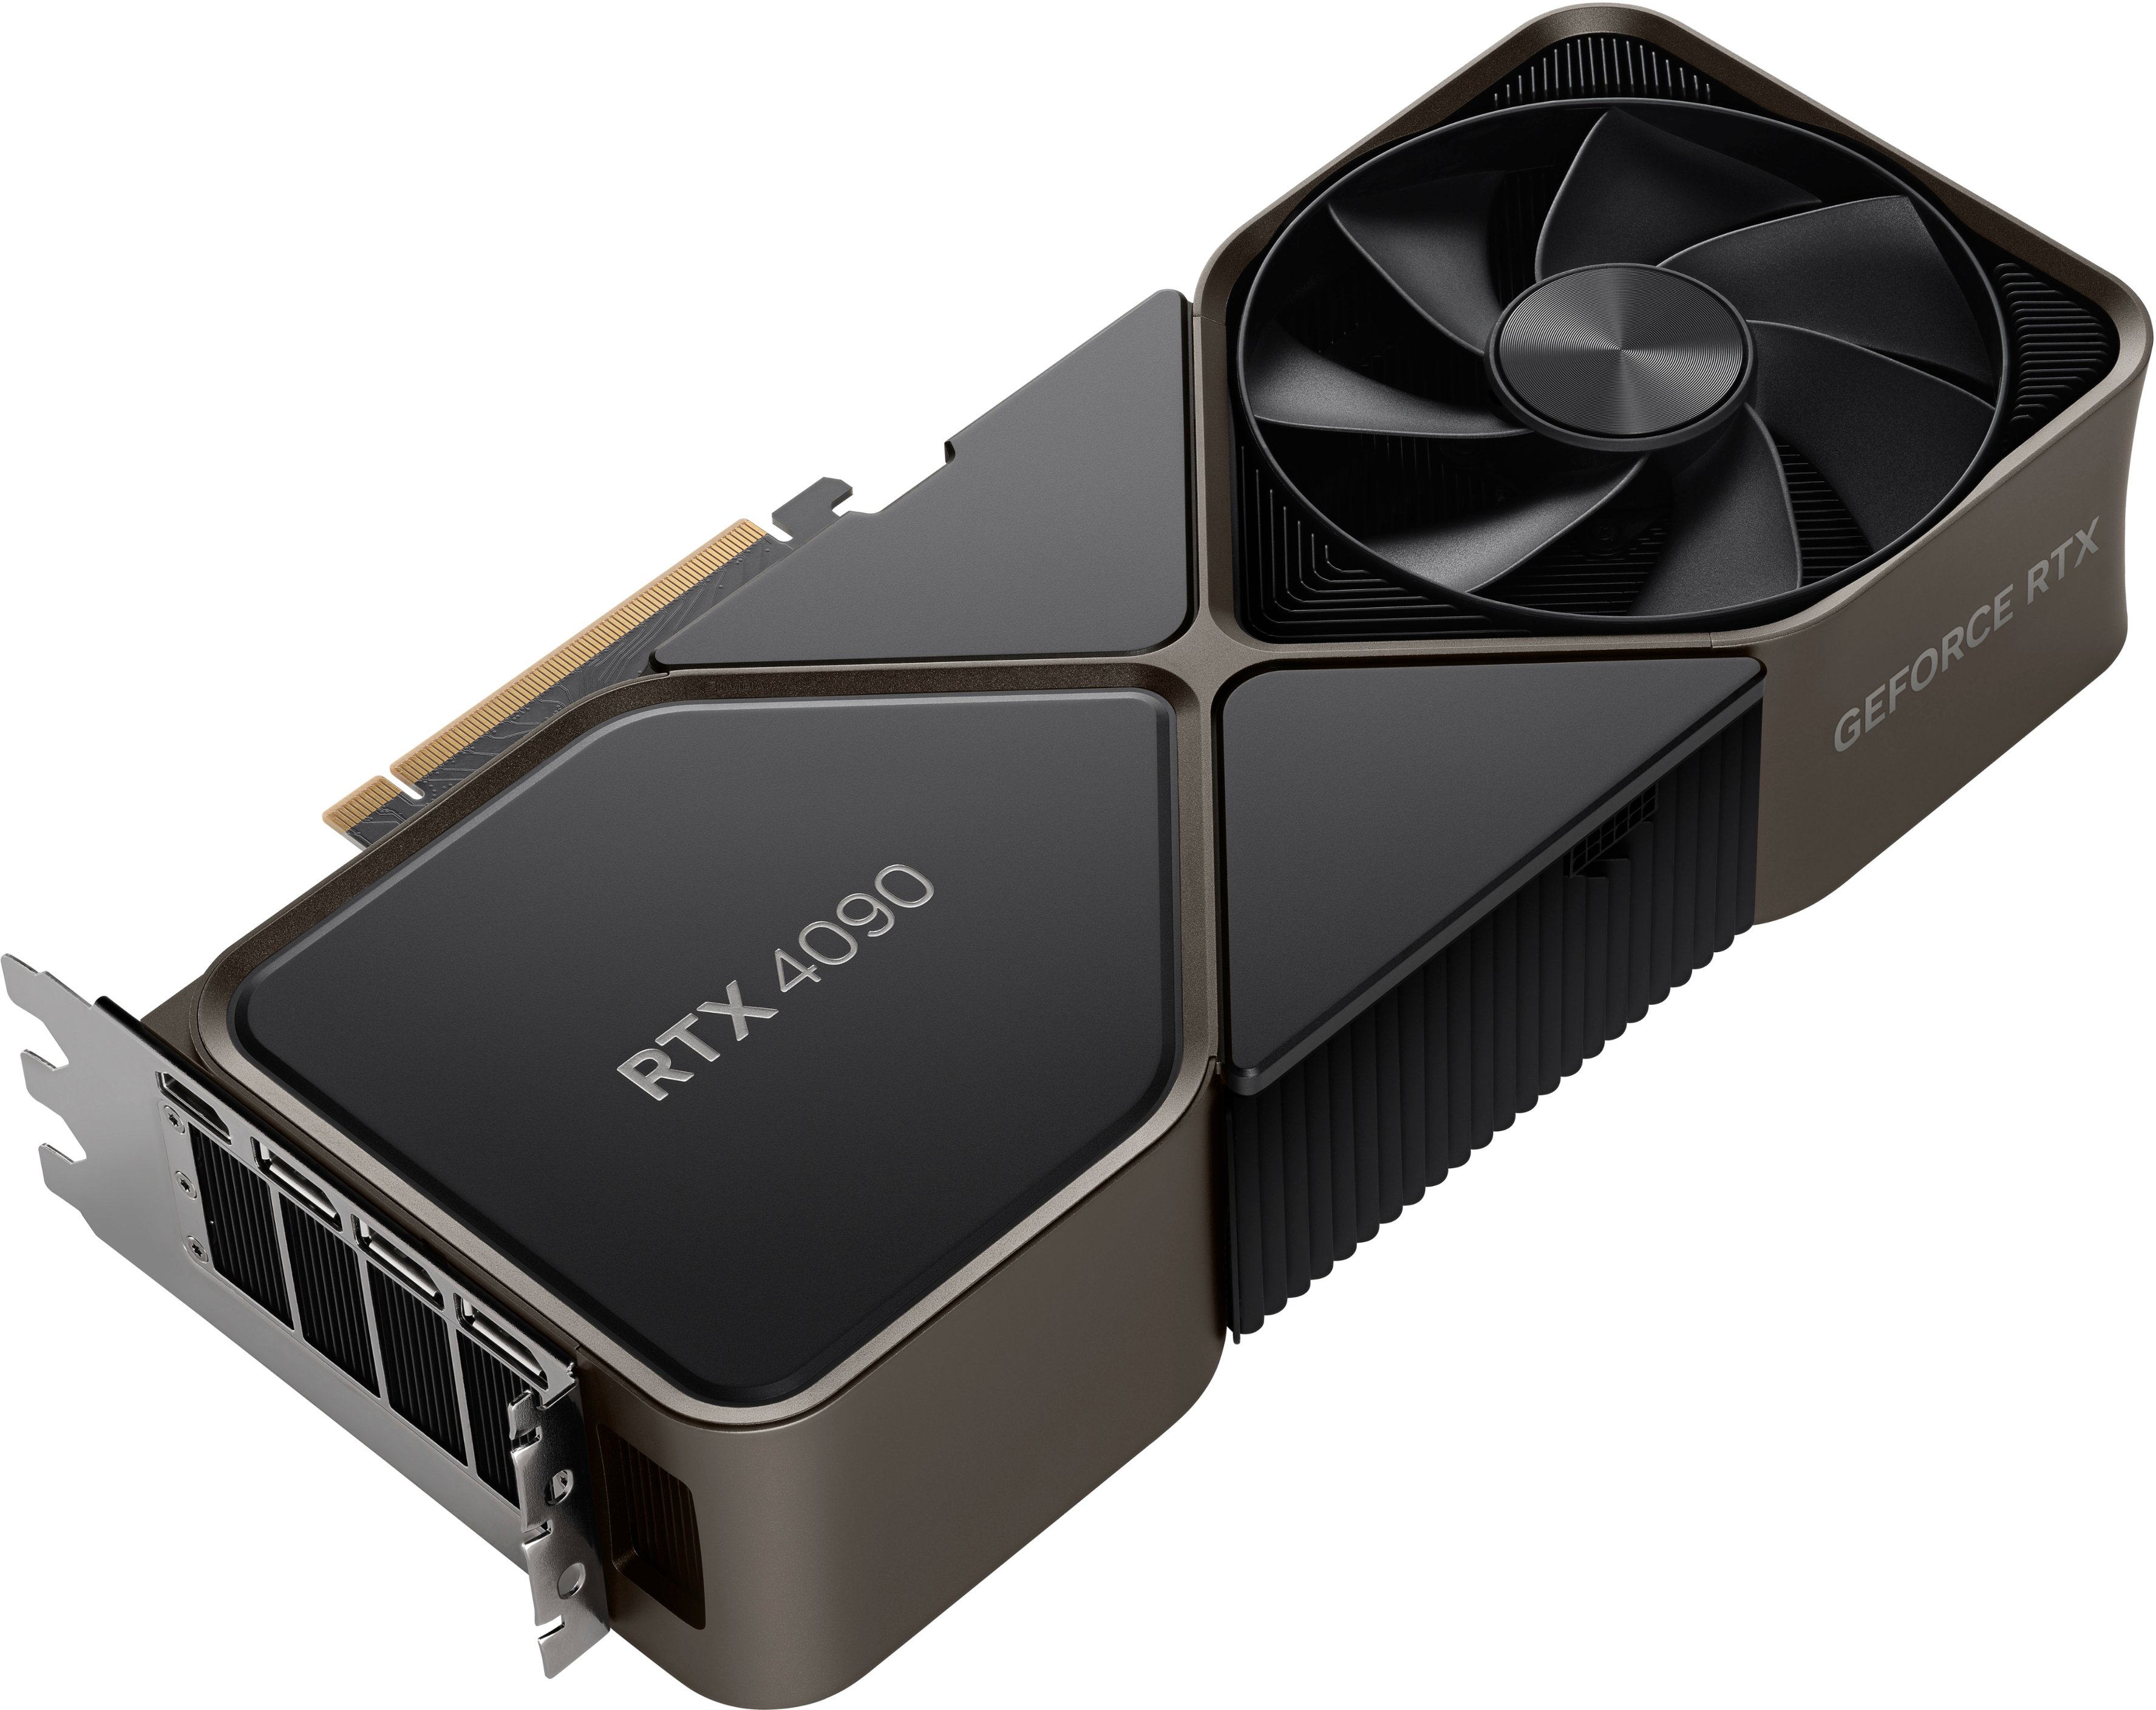 NVIDIA GeForce RTX 4090 24GB GDDR6X Graphics Card Titanium/Black  900-1G136-2530-000 - Best Buy